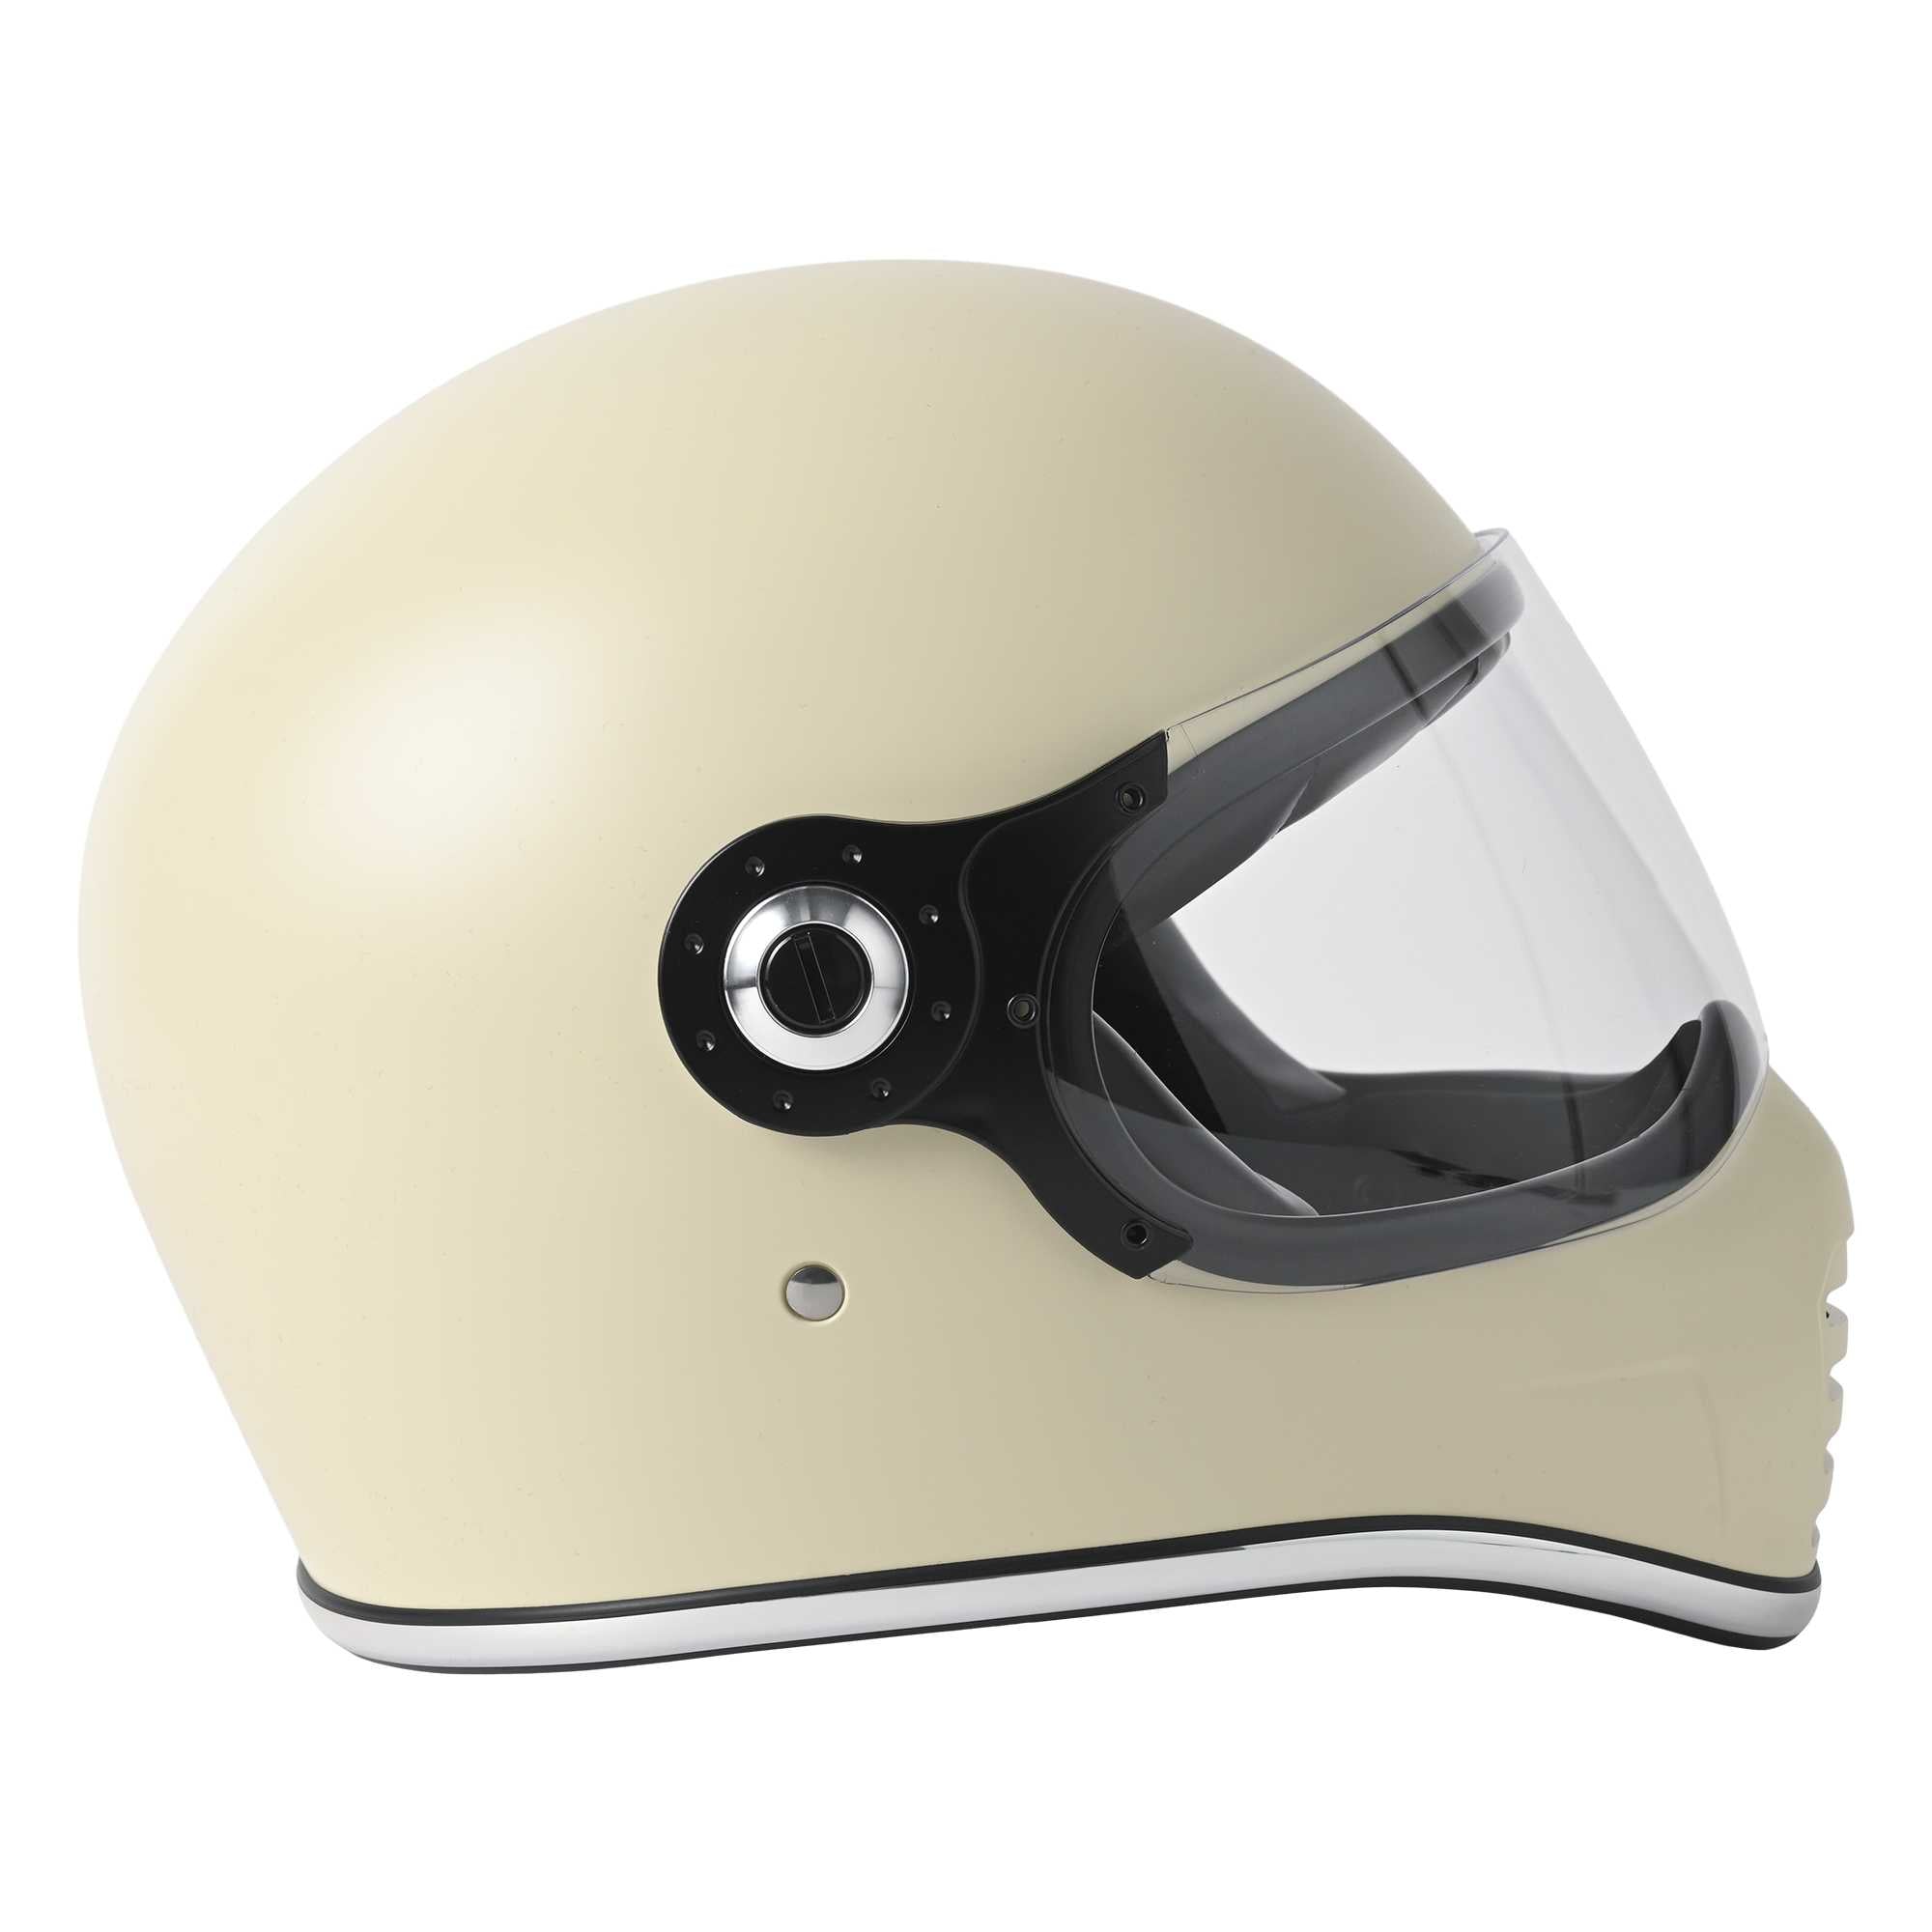 RIDEZ XX HELMET 限量型号 OFF WHITE 全脸摩托车头盔